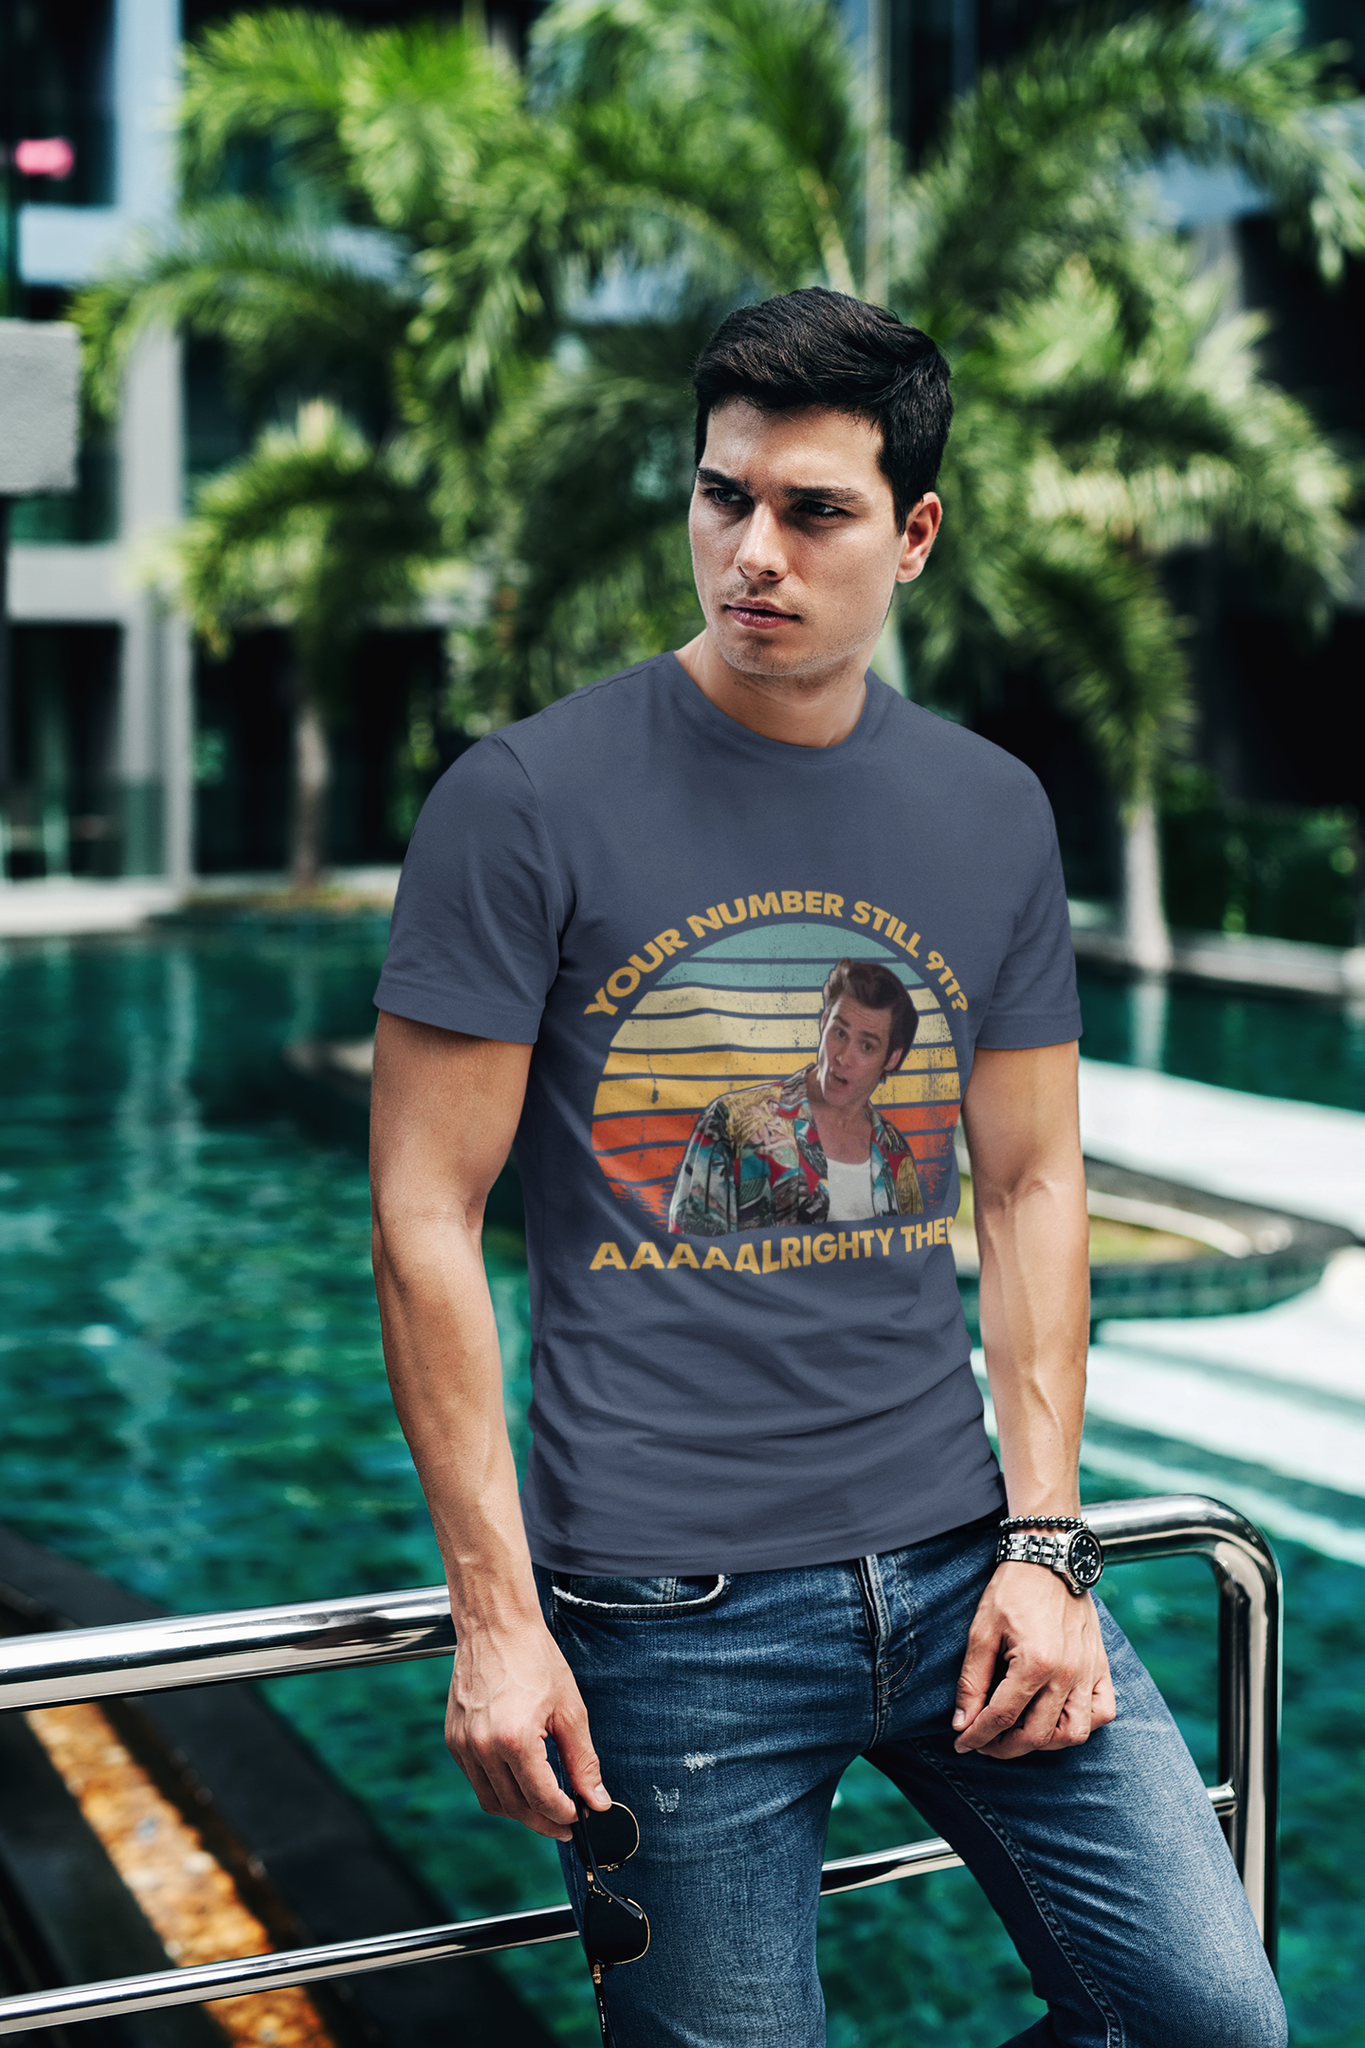 Ace Ventura Pet Detective Vintage T Shirt, Ace Ventura T Shirt, Your Number Still 911 Alrighty Then Tshirt